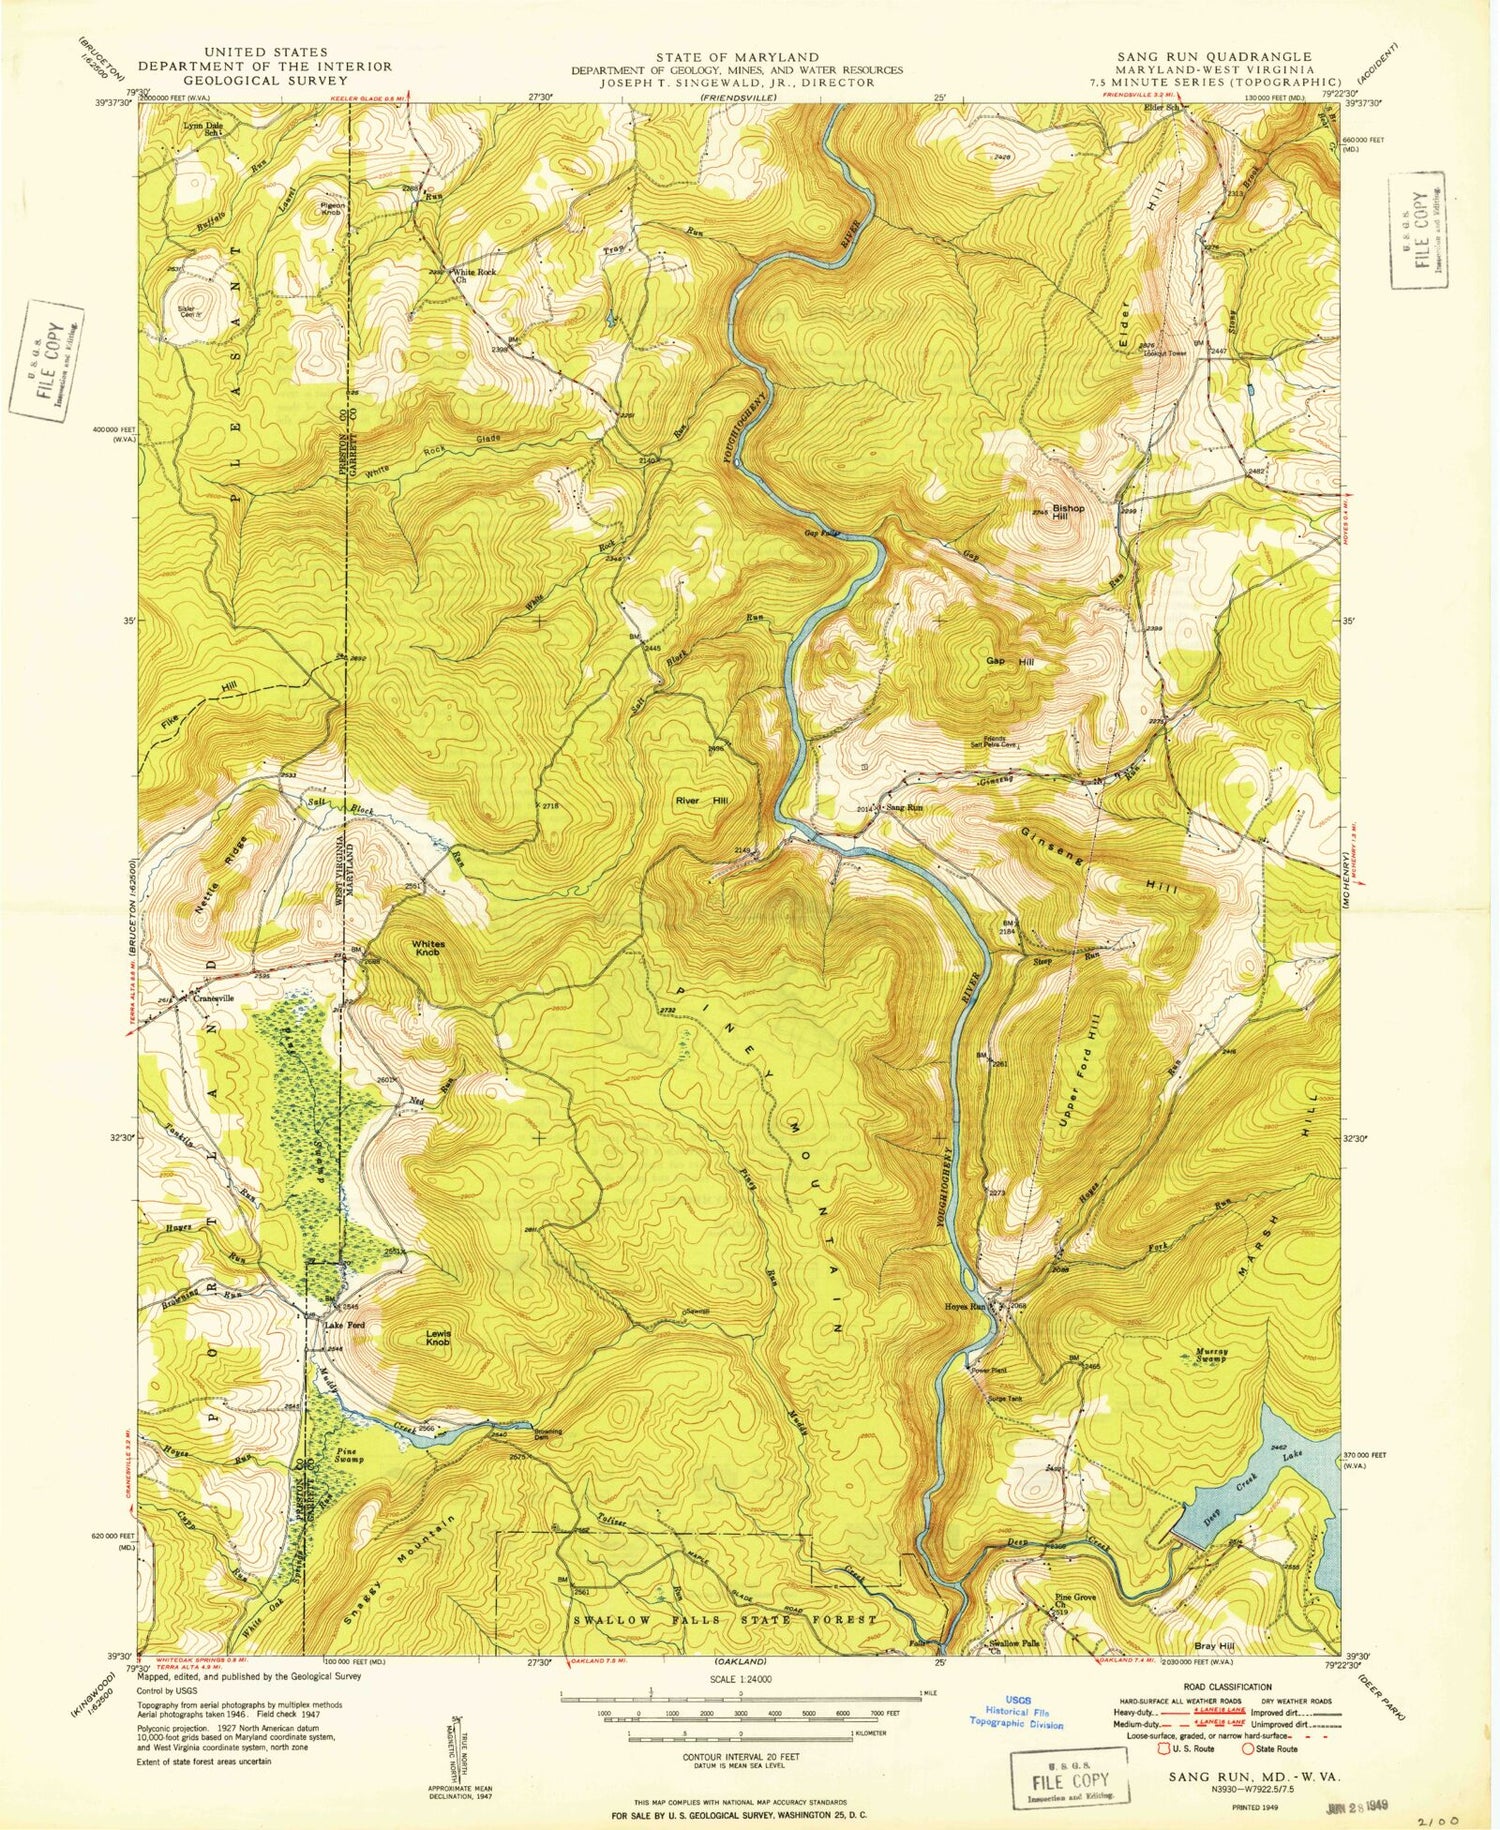 Classic USGS Sang Run Maryland 7.5'x7.5' Topo Map Image